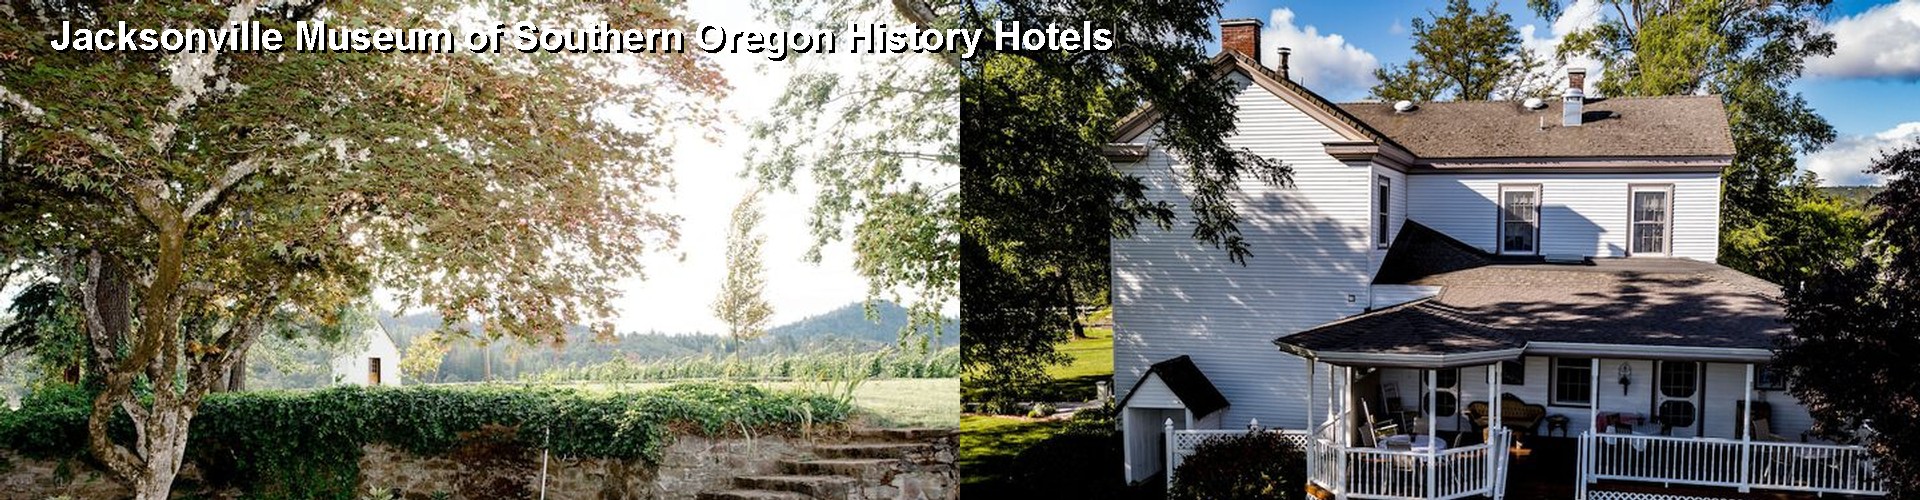 3 Best Hotels near Jacksonville Museum of Southern Oregon History